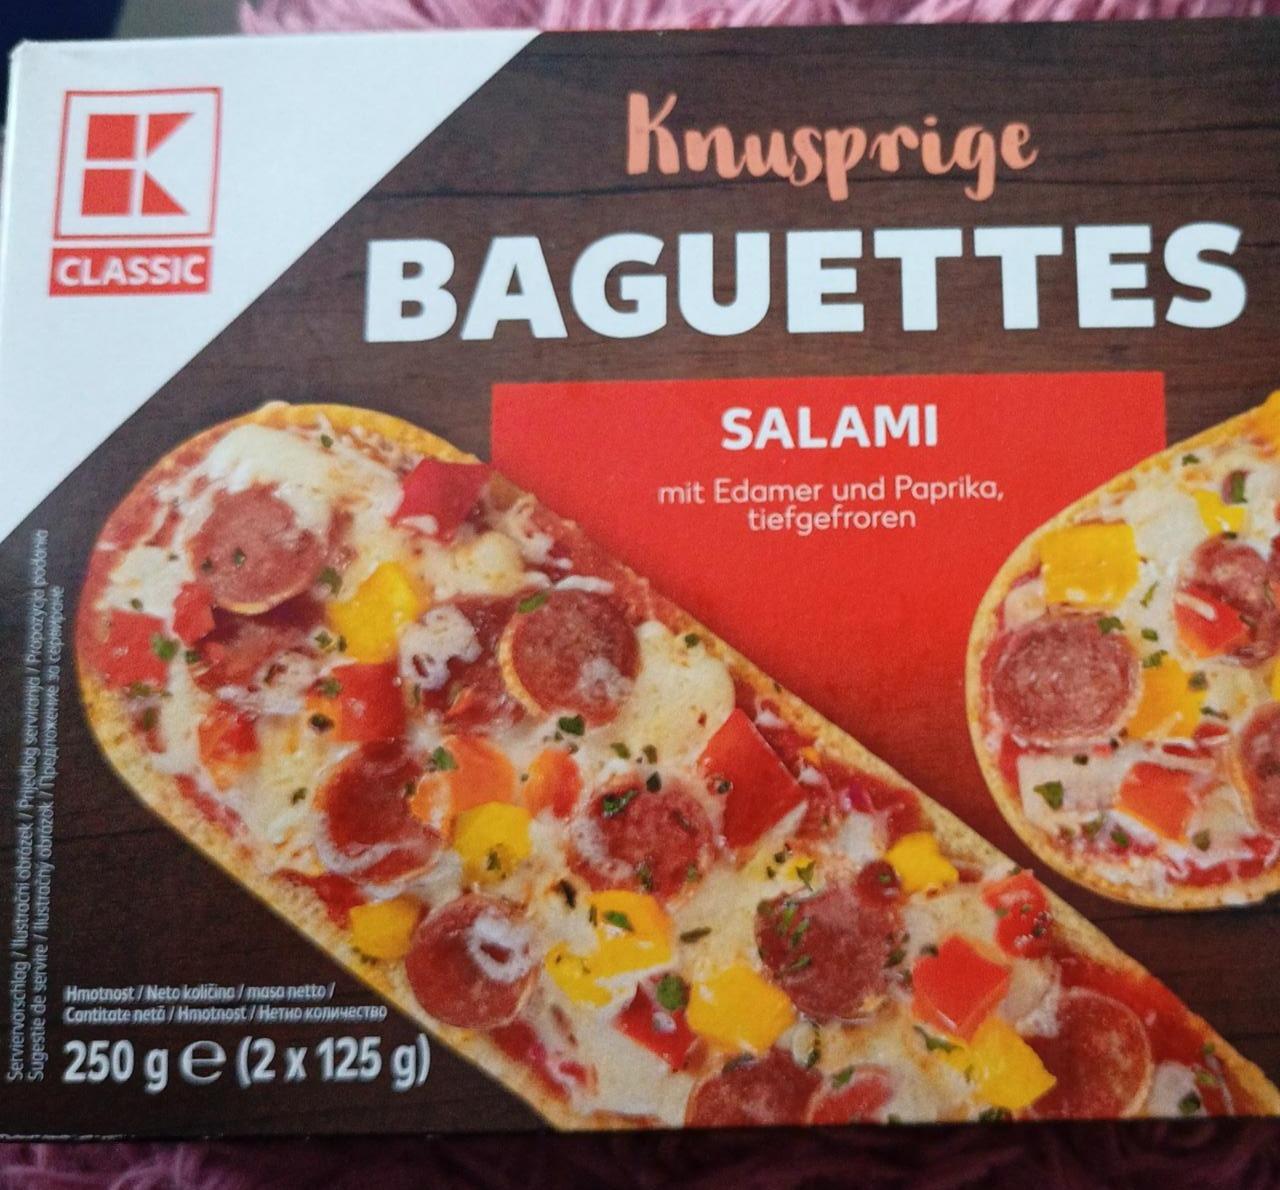 Zdjęcia - Knusprige baguettes Salami K-Classic